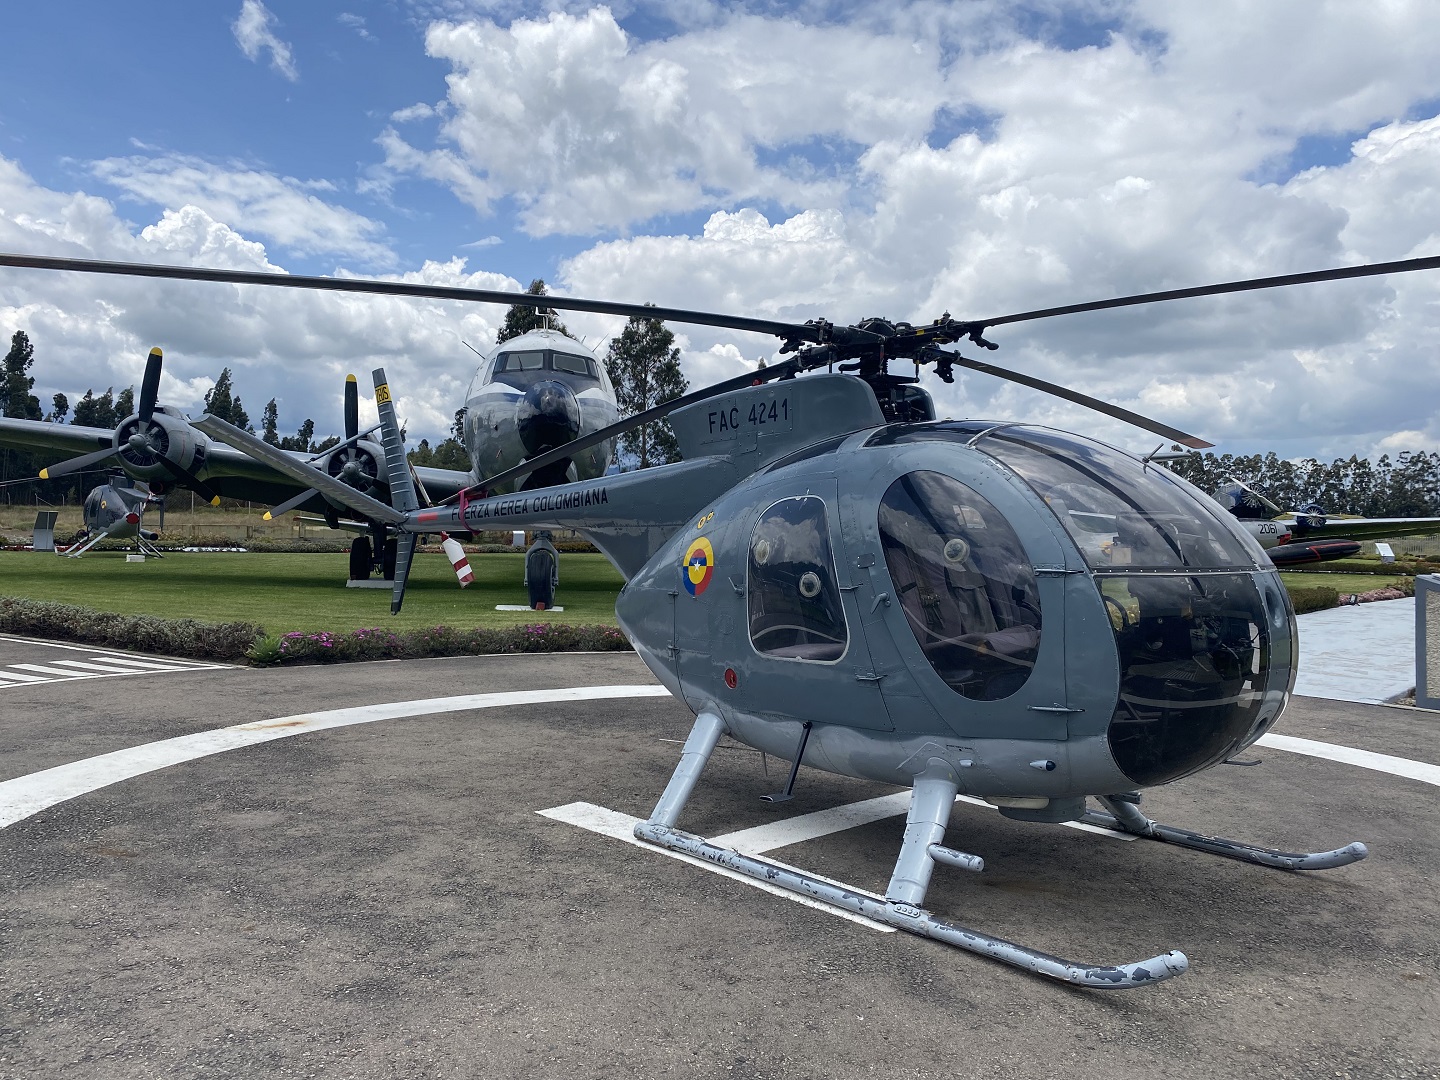 CAYUSE OH-6A FAC 4241